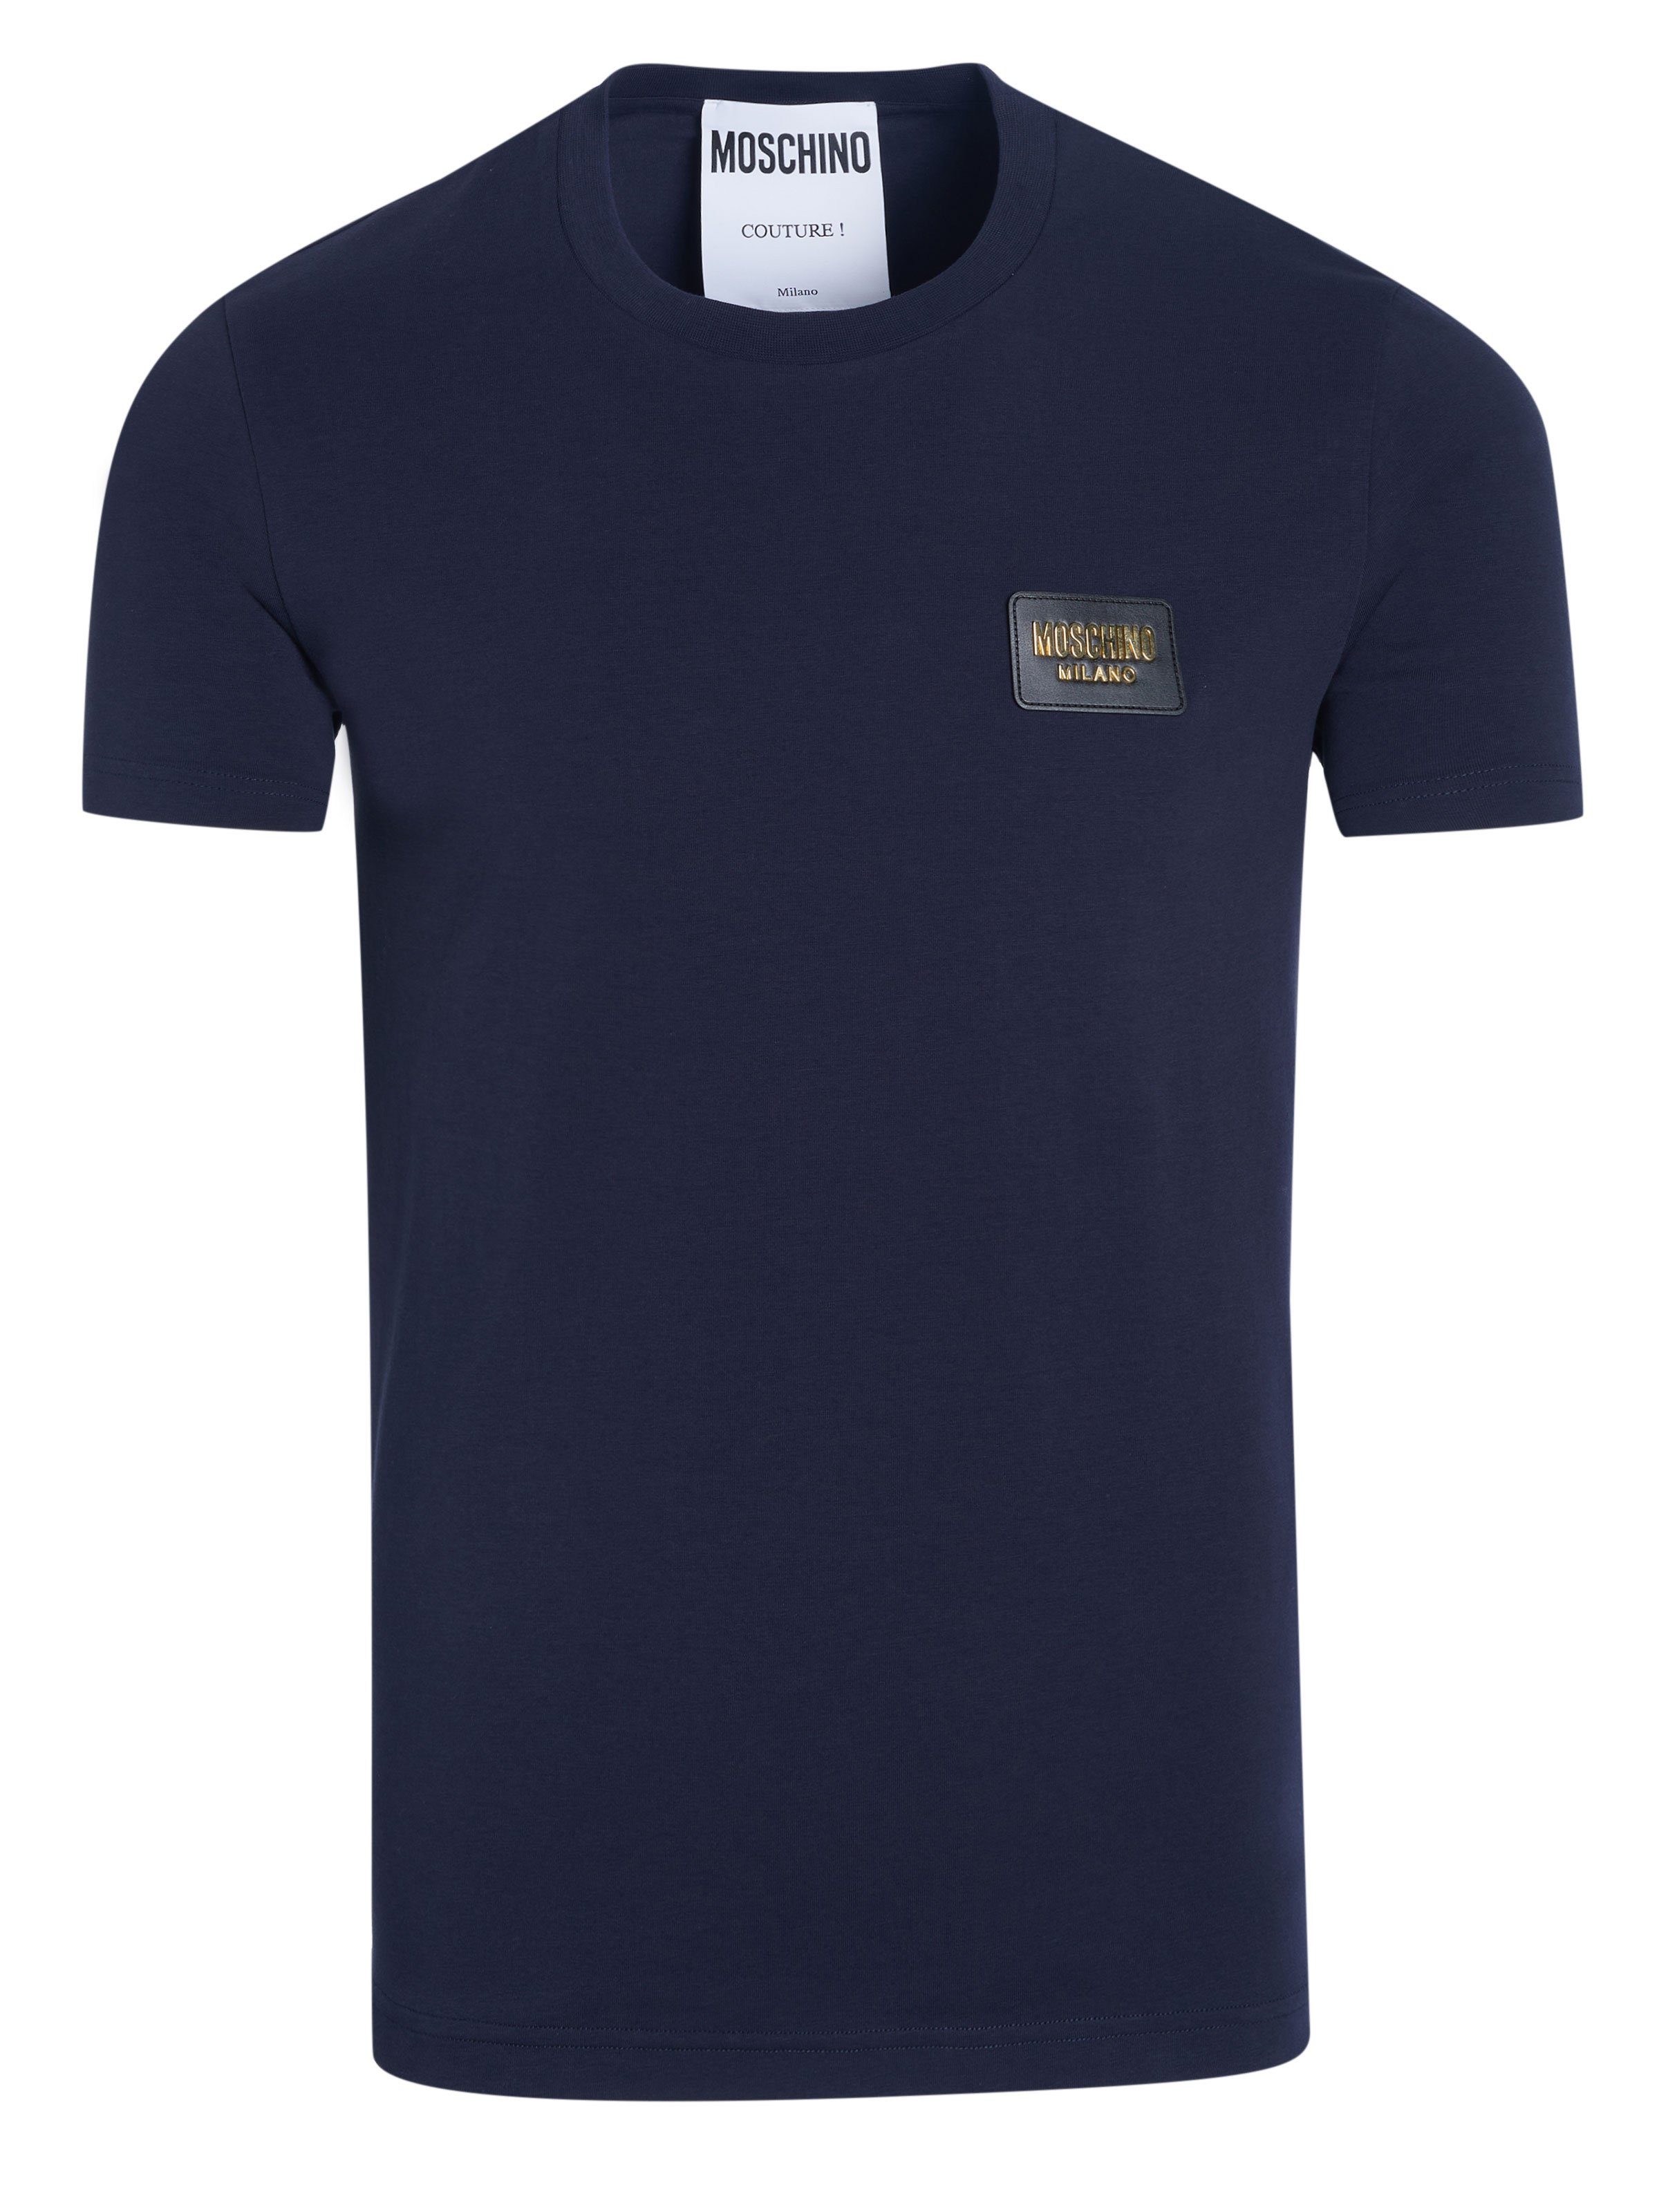 Moschino T-Shirt Moschino Couture! T-Shirt dunkelblau